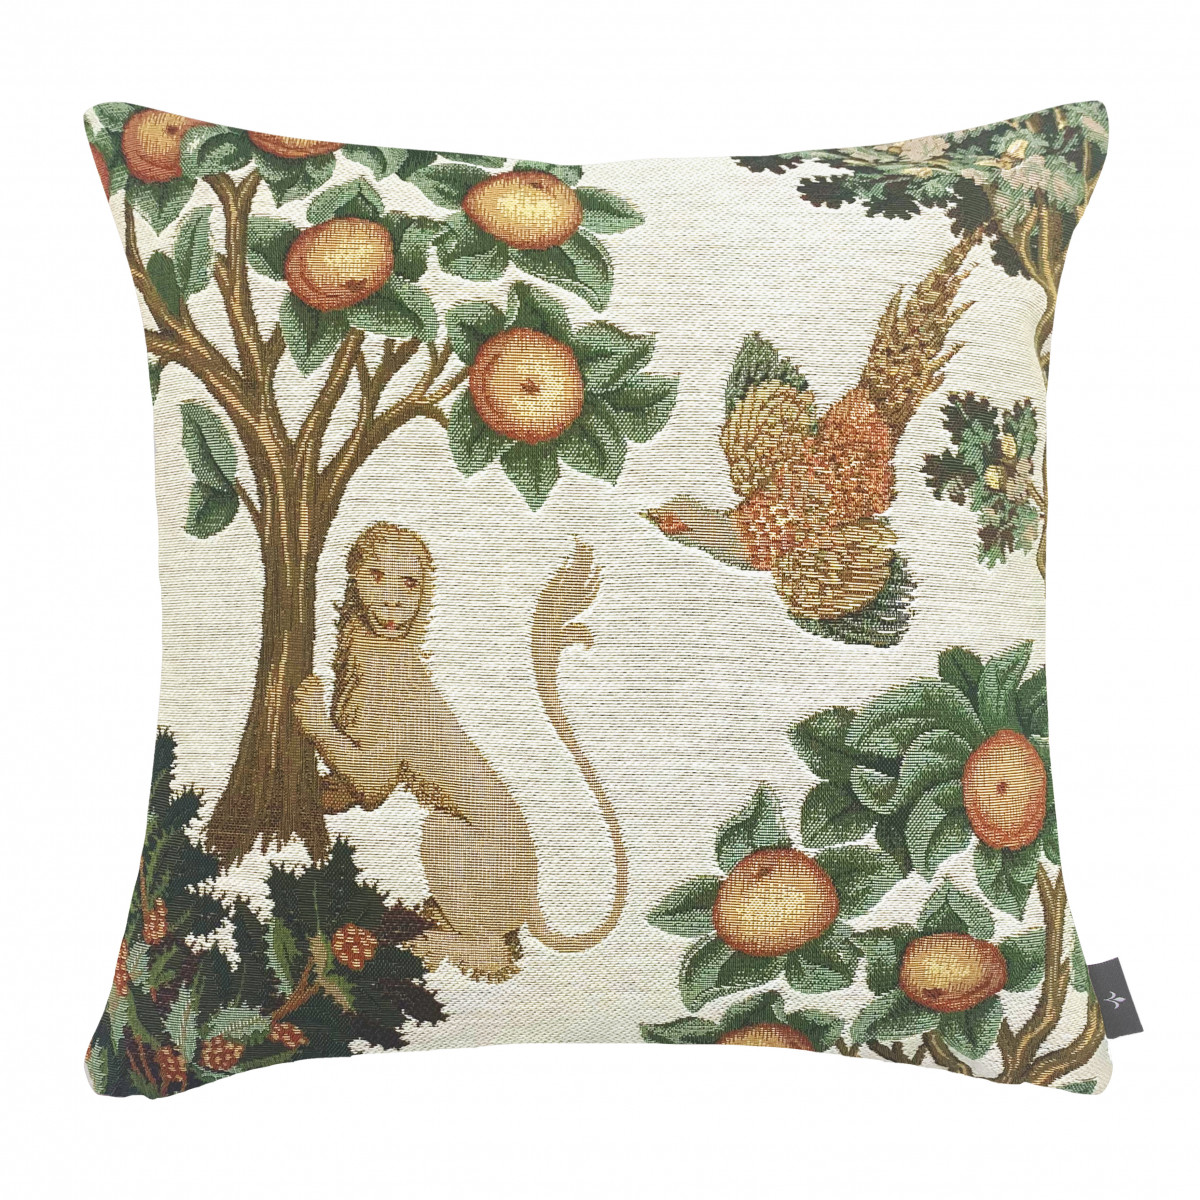 Art De Lys 50 x 50cm White Fantasy Forest Tapestry Cushion Cover